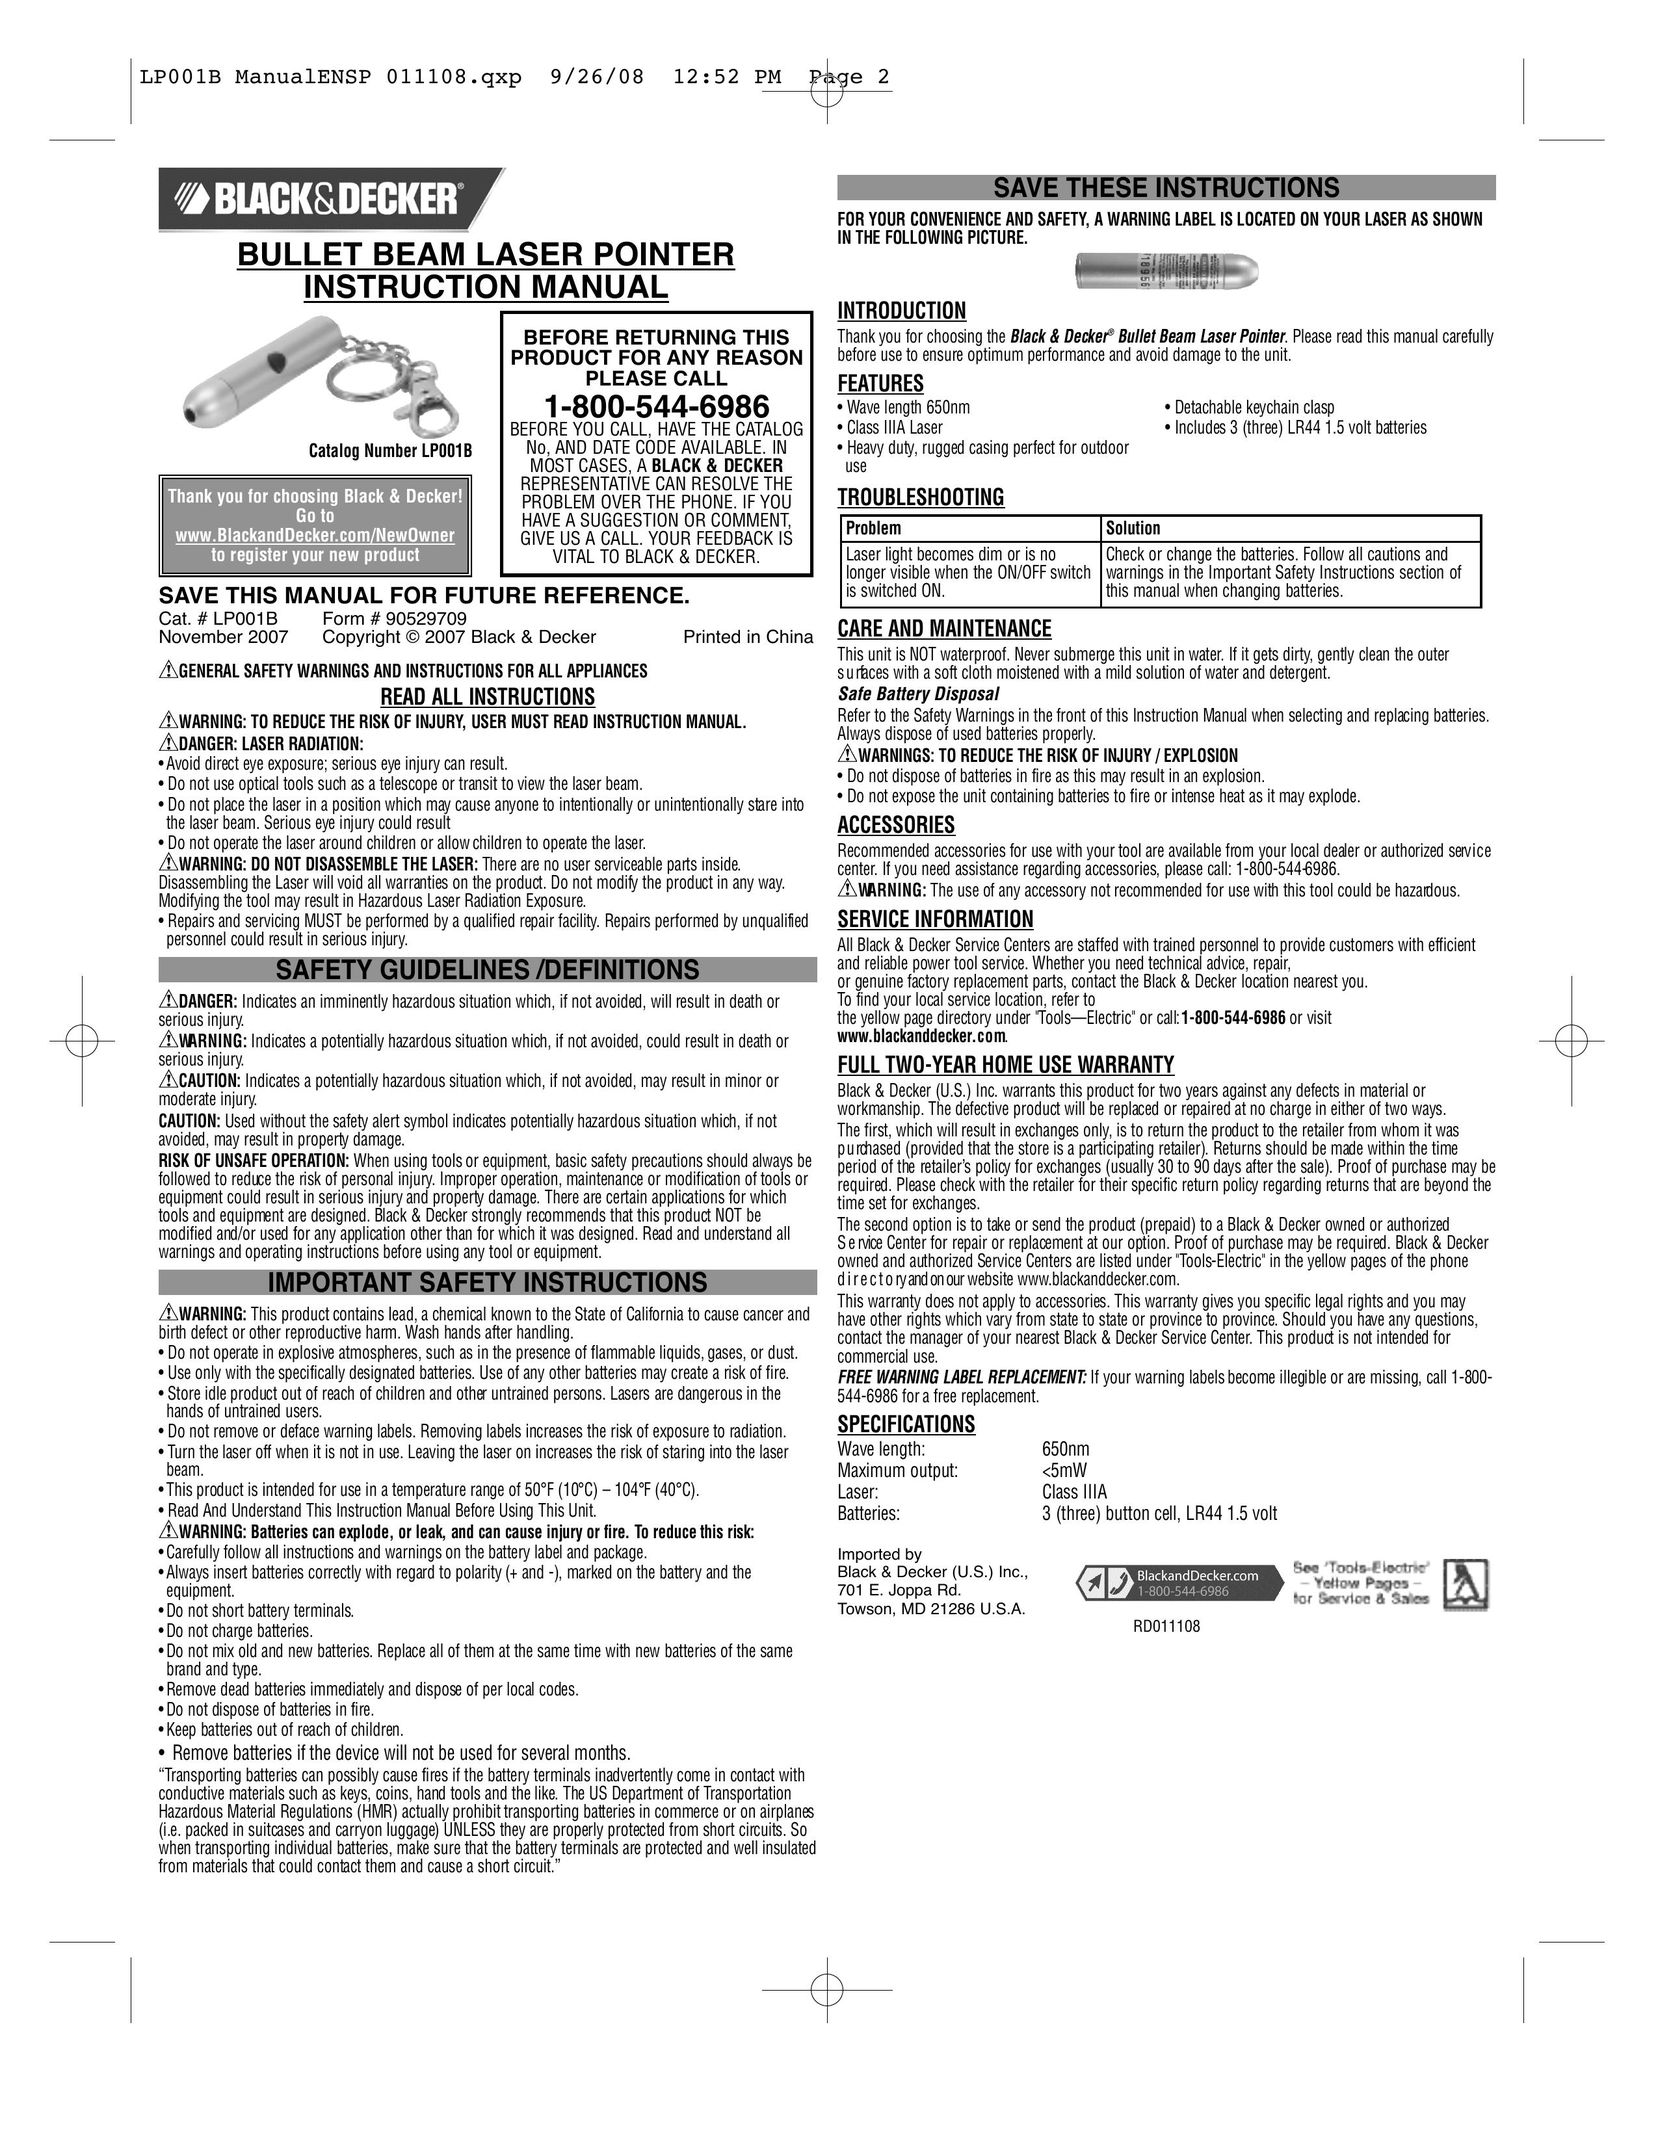 Black & Decker 90529709 Laser Pointer User Manual